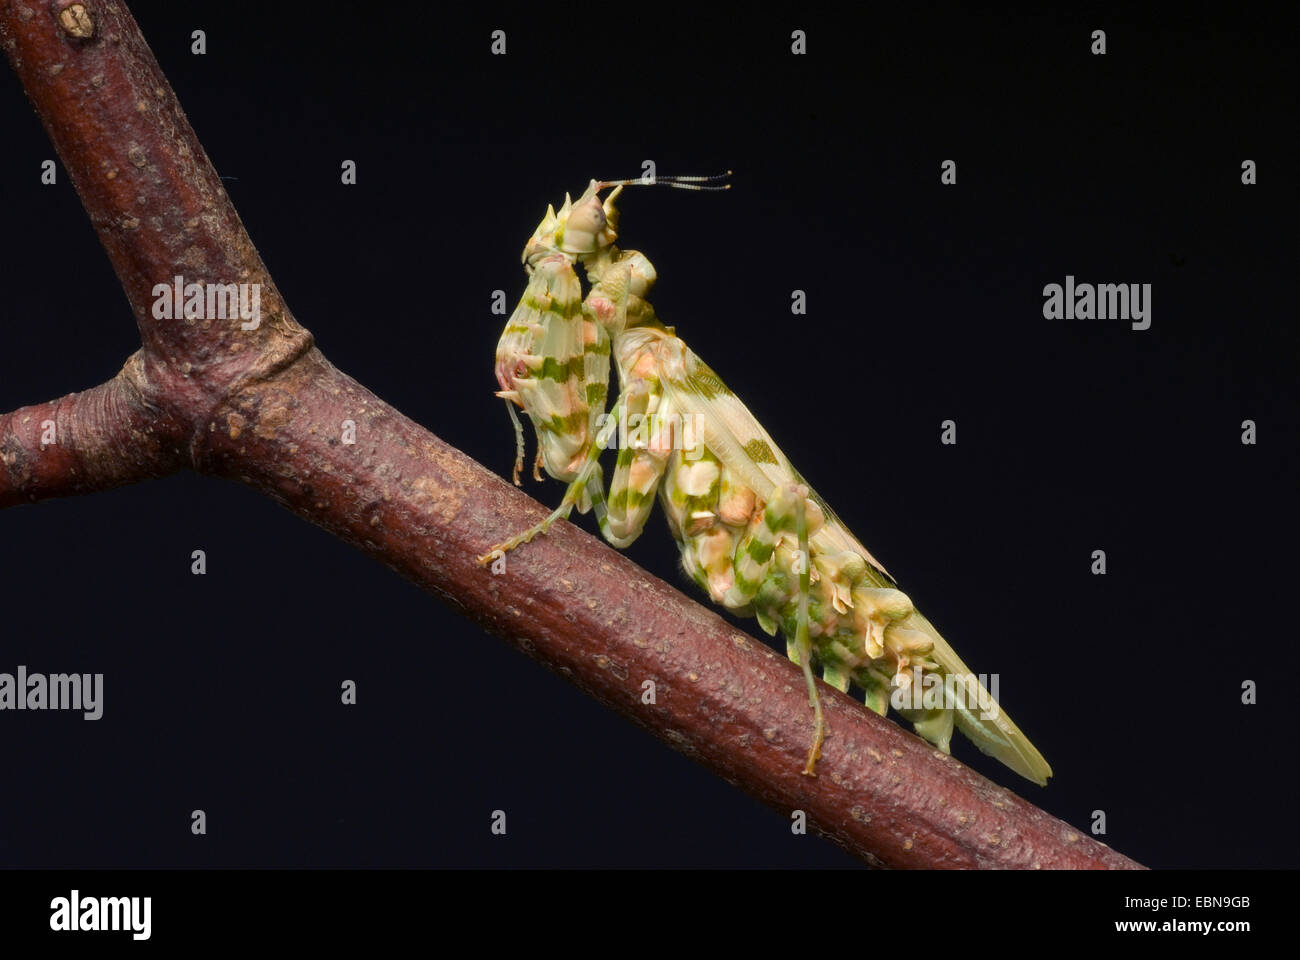 Wahlbergi's Spiny Flower Mantis, Wahlbergis Spiny Flower Mantis (Pseudocreobotra wahlbergi), on a branch Stock Photo